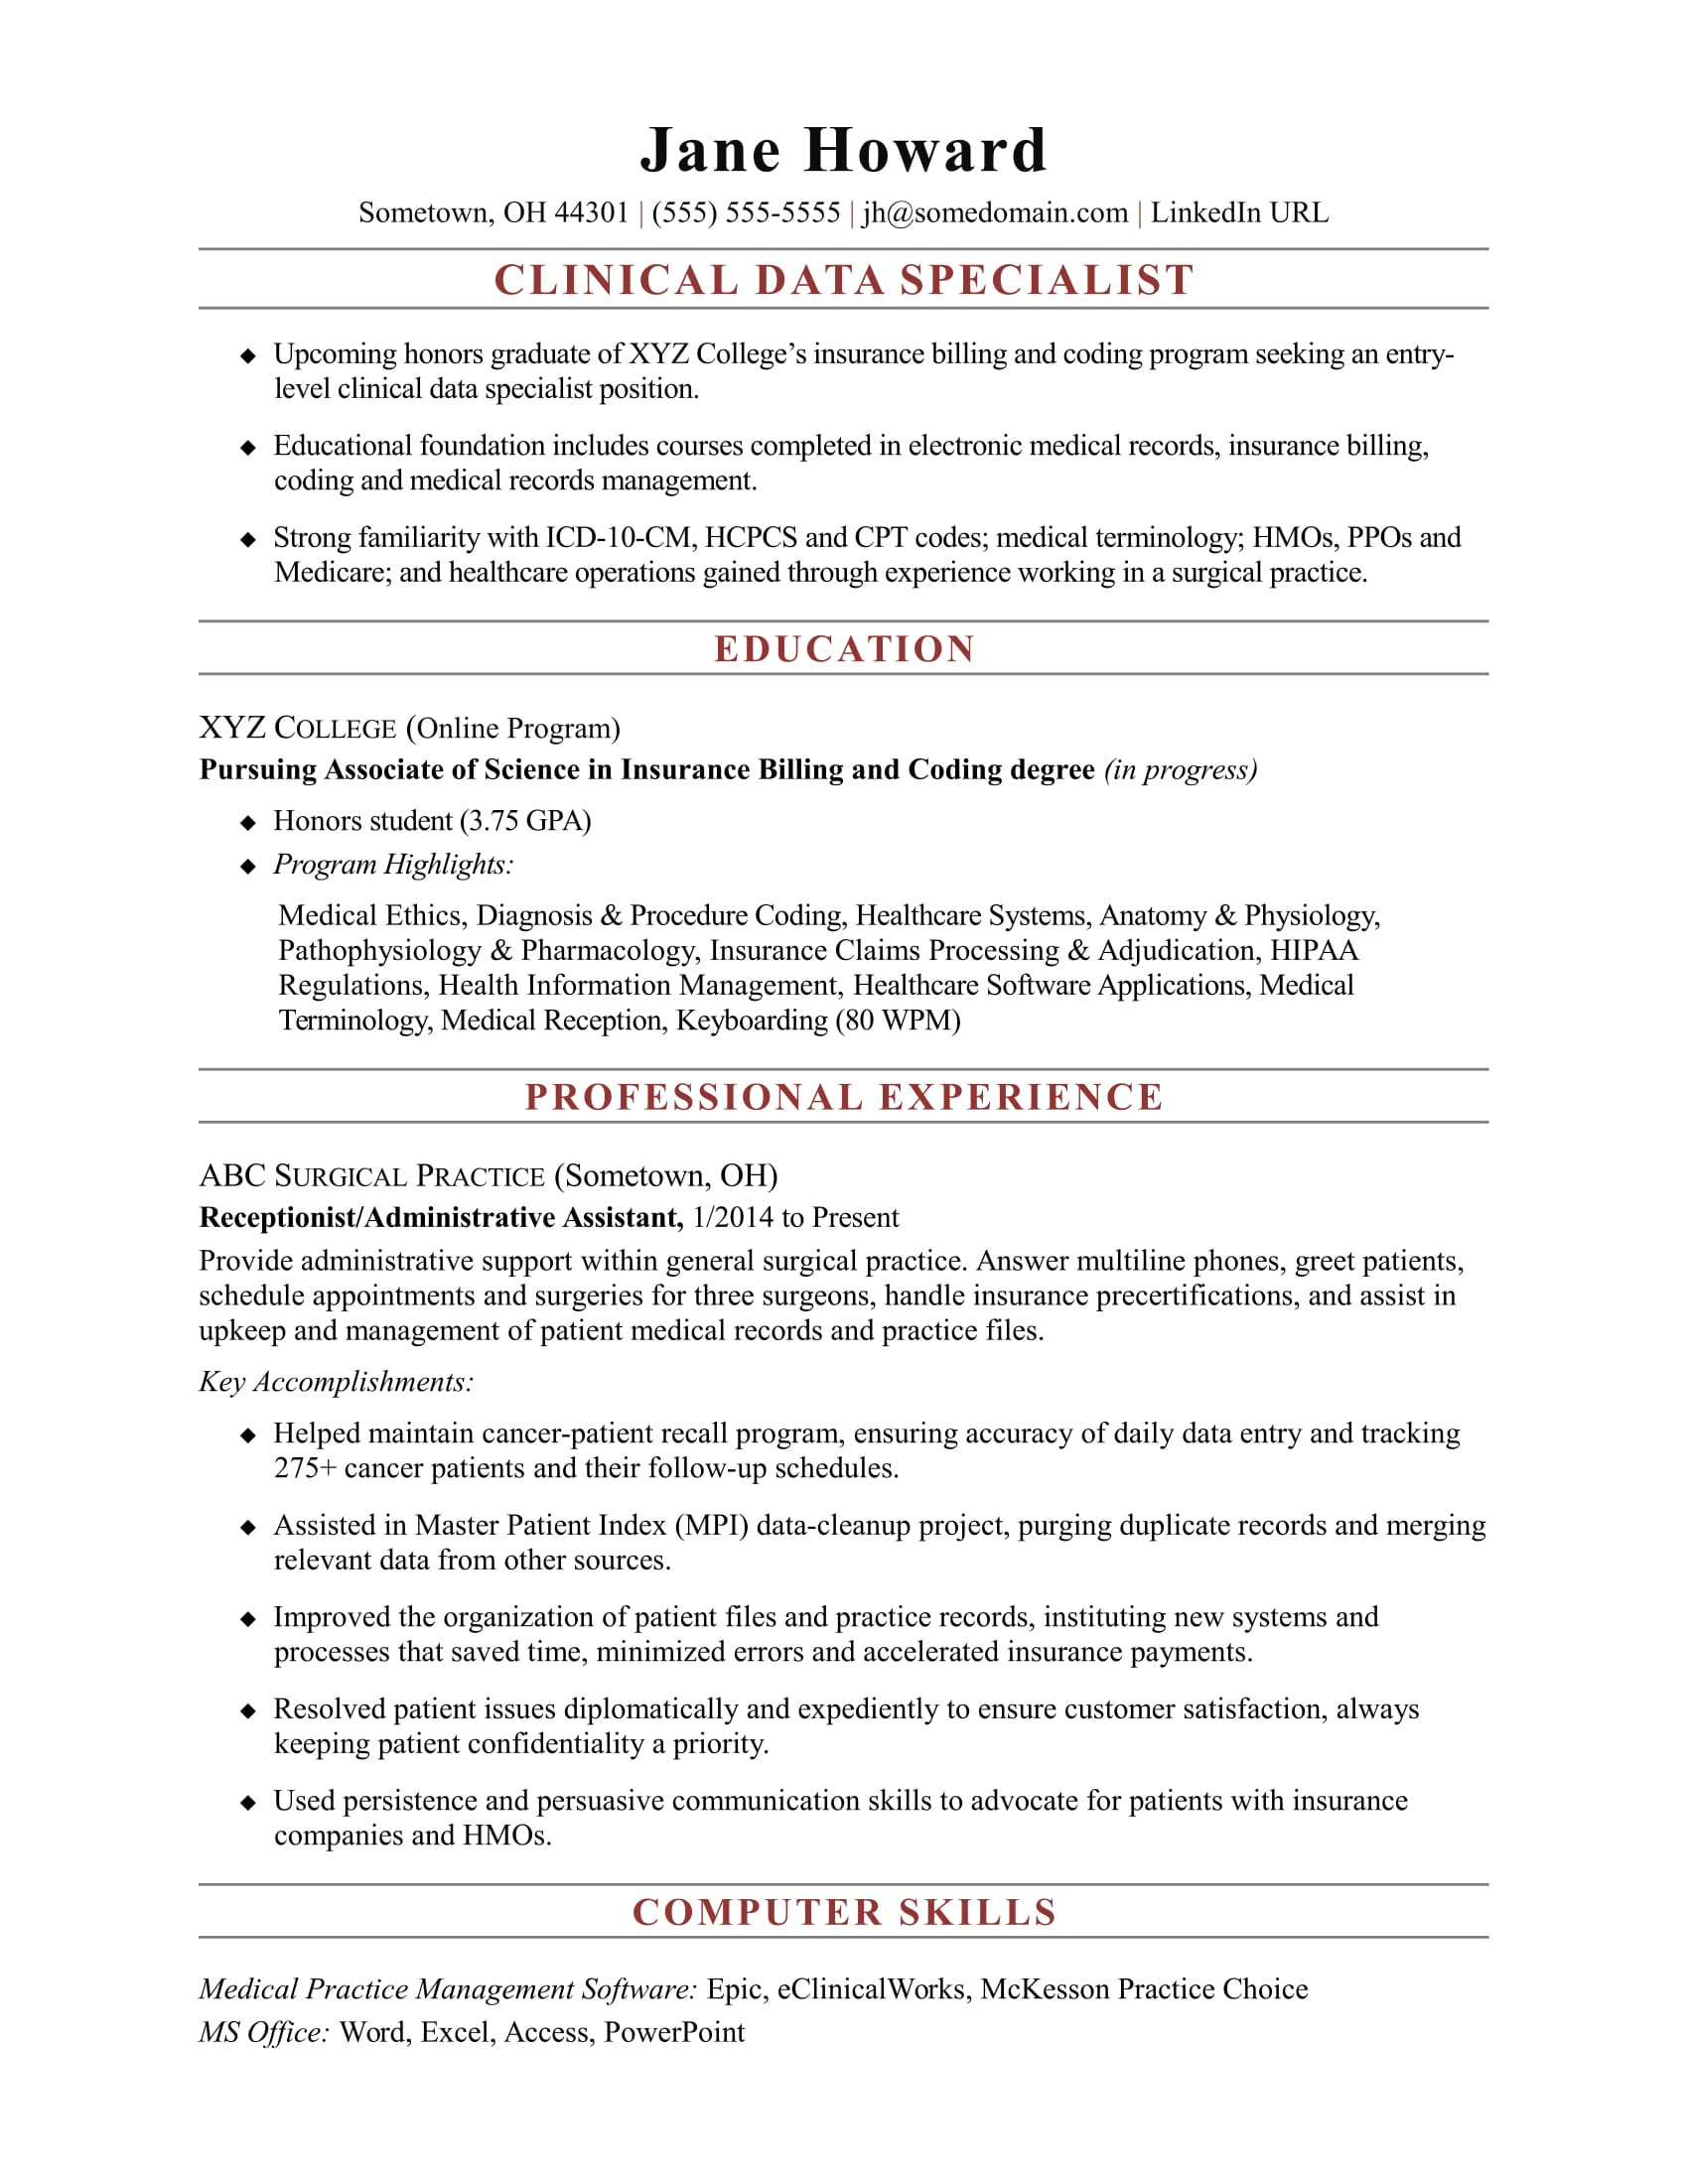 Sample Resume From International Student for Entry Level Jobs Entry-level Clinical Data Specialist Resume Sample Monster.com